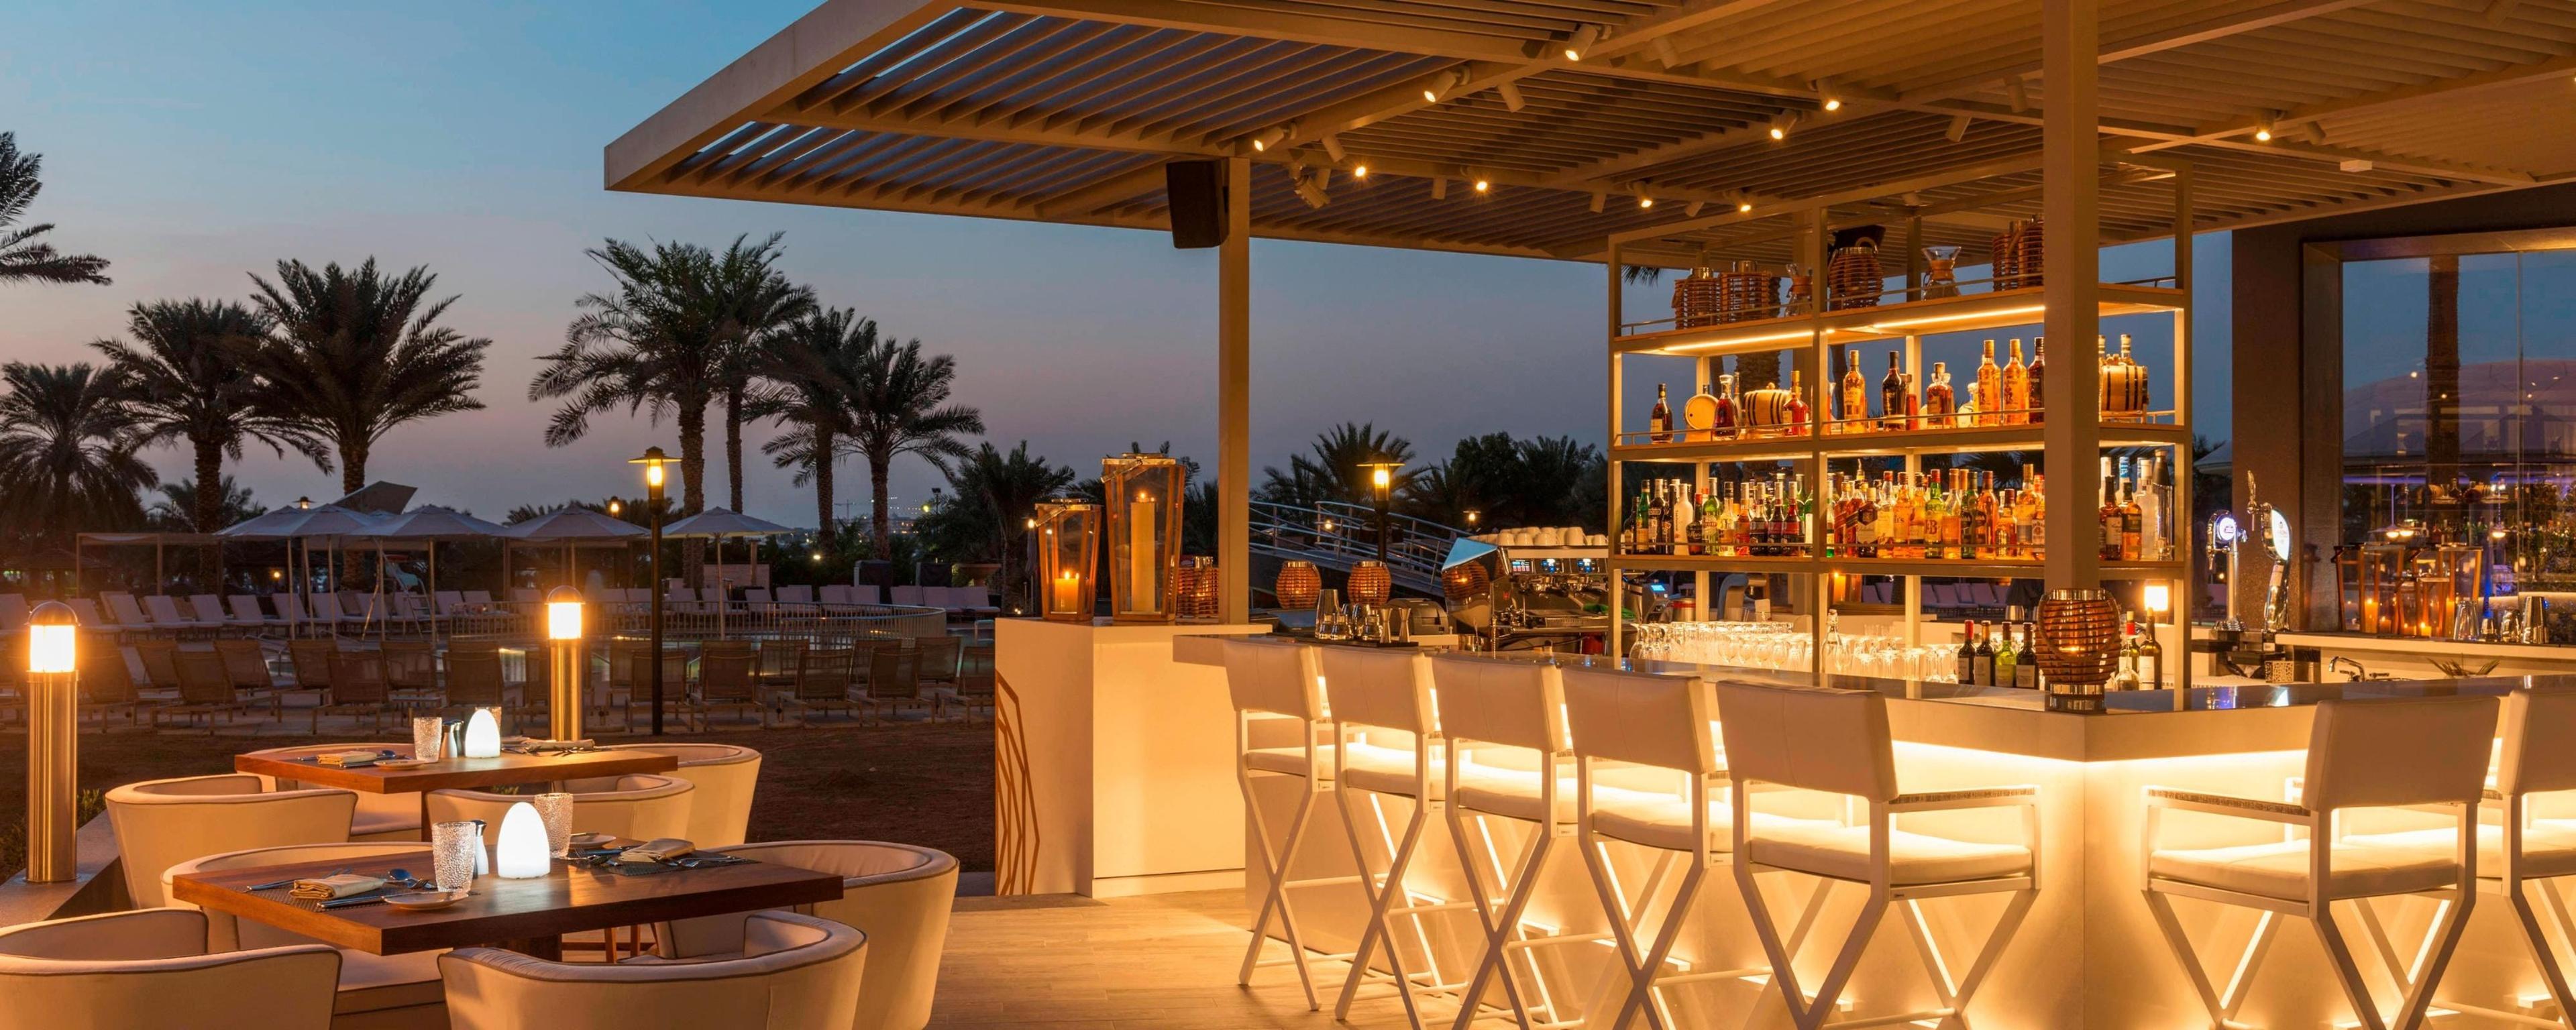 Le Royal Meridien Beach Resort & Spa - Dubai, United Arab Emirates